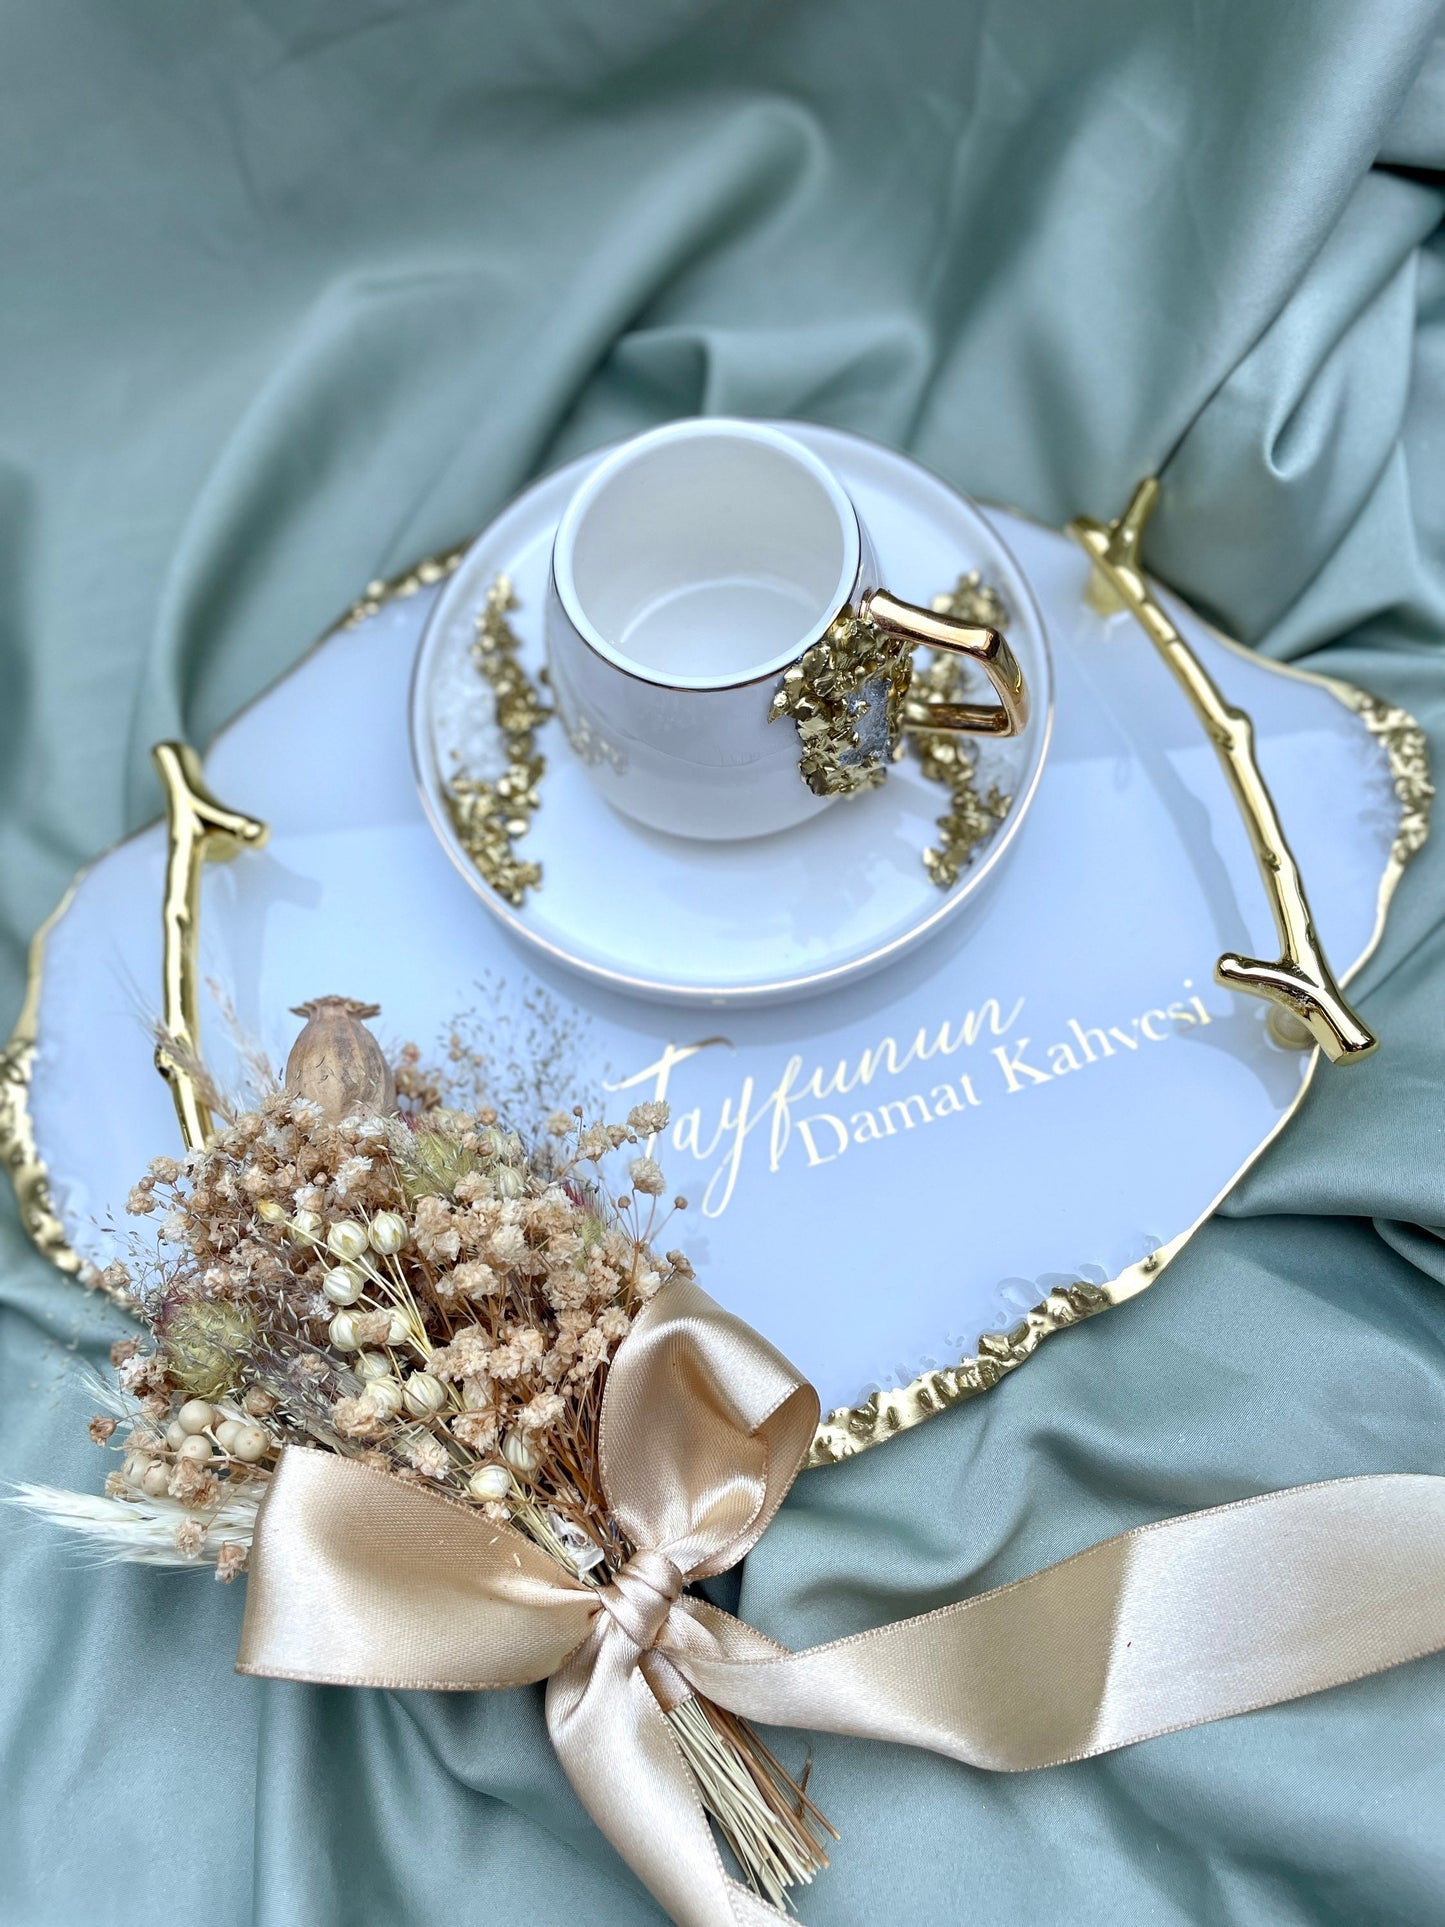 Verlobung  Hochzeit Mokkatasse damat kahvesi fincani